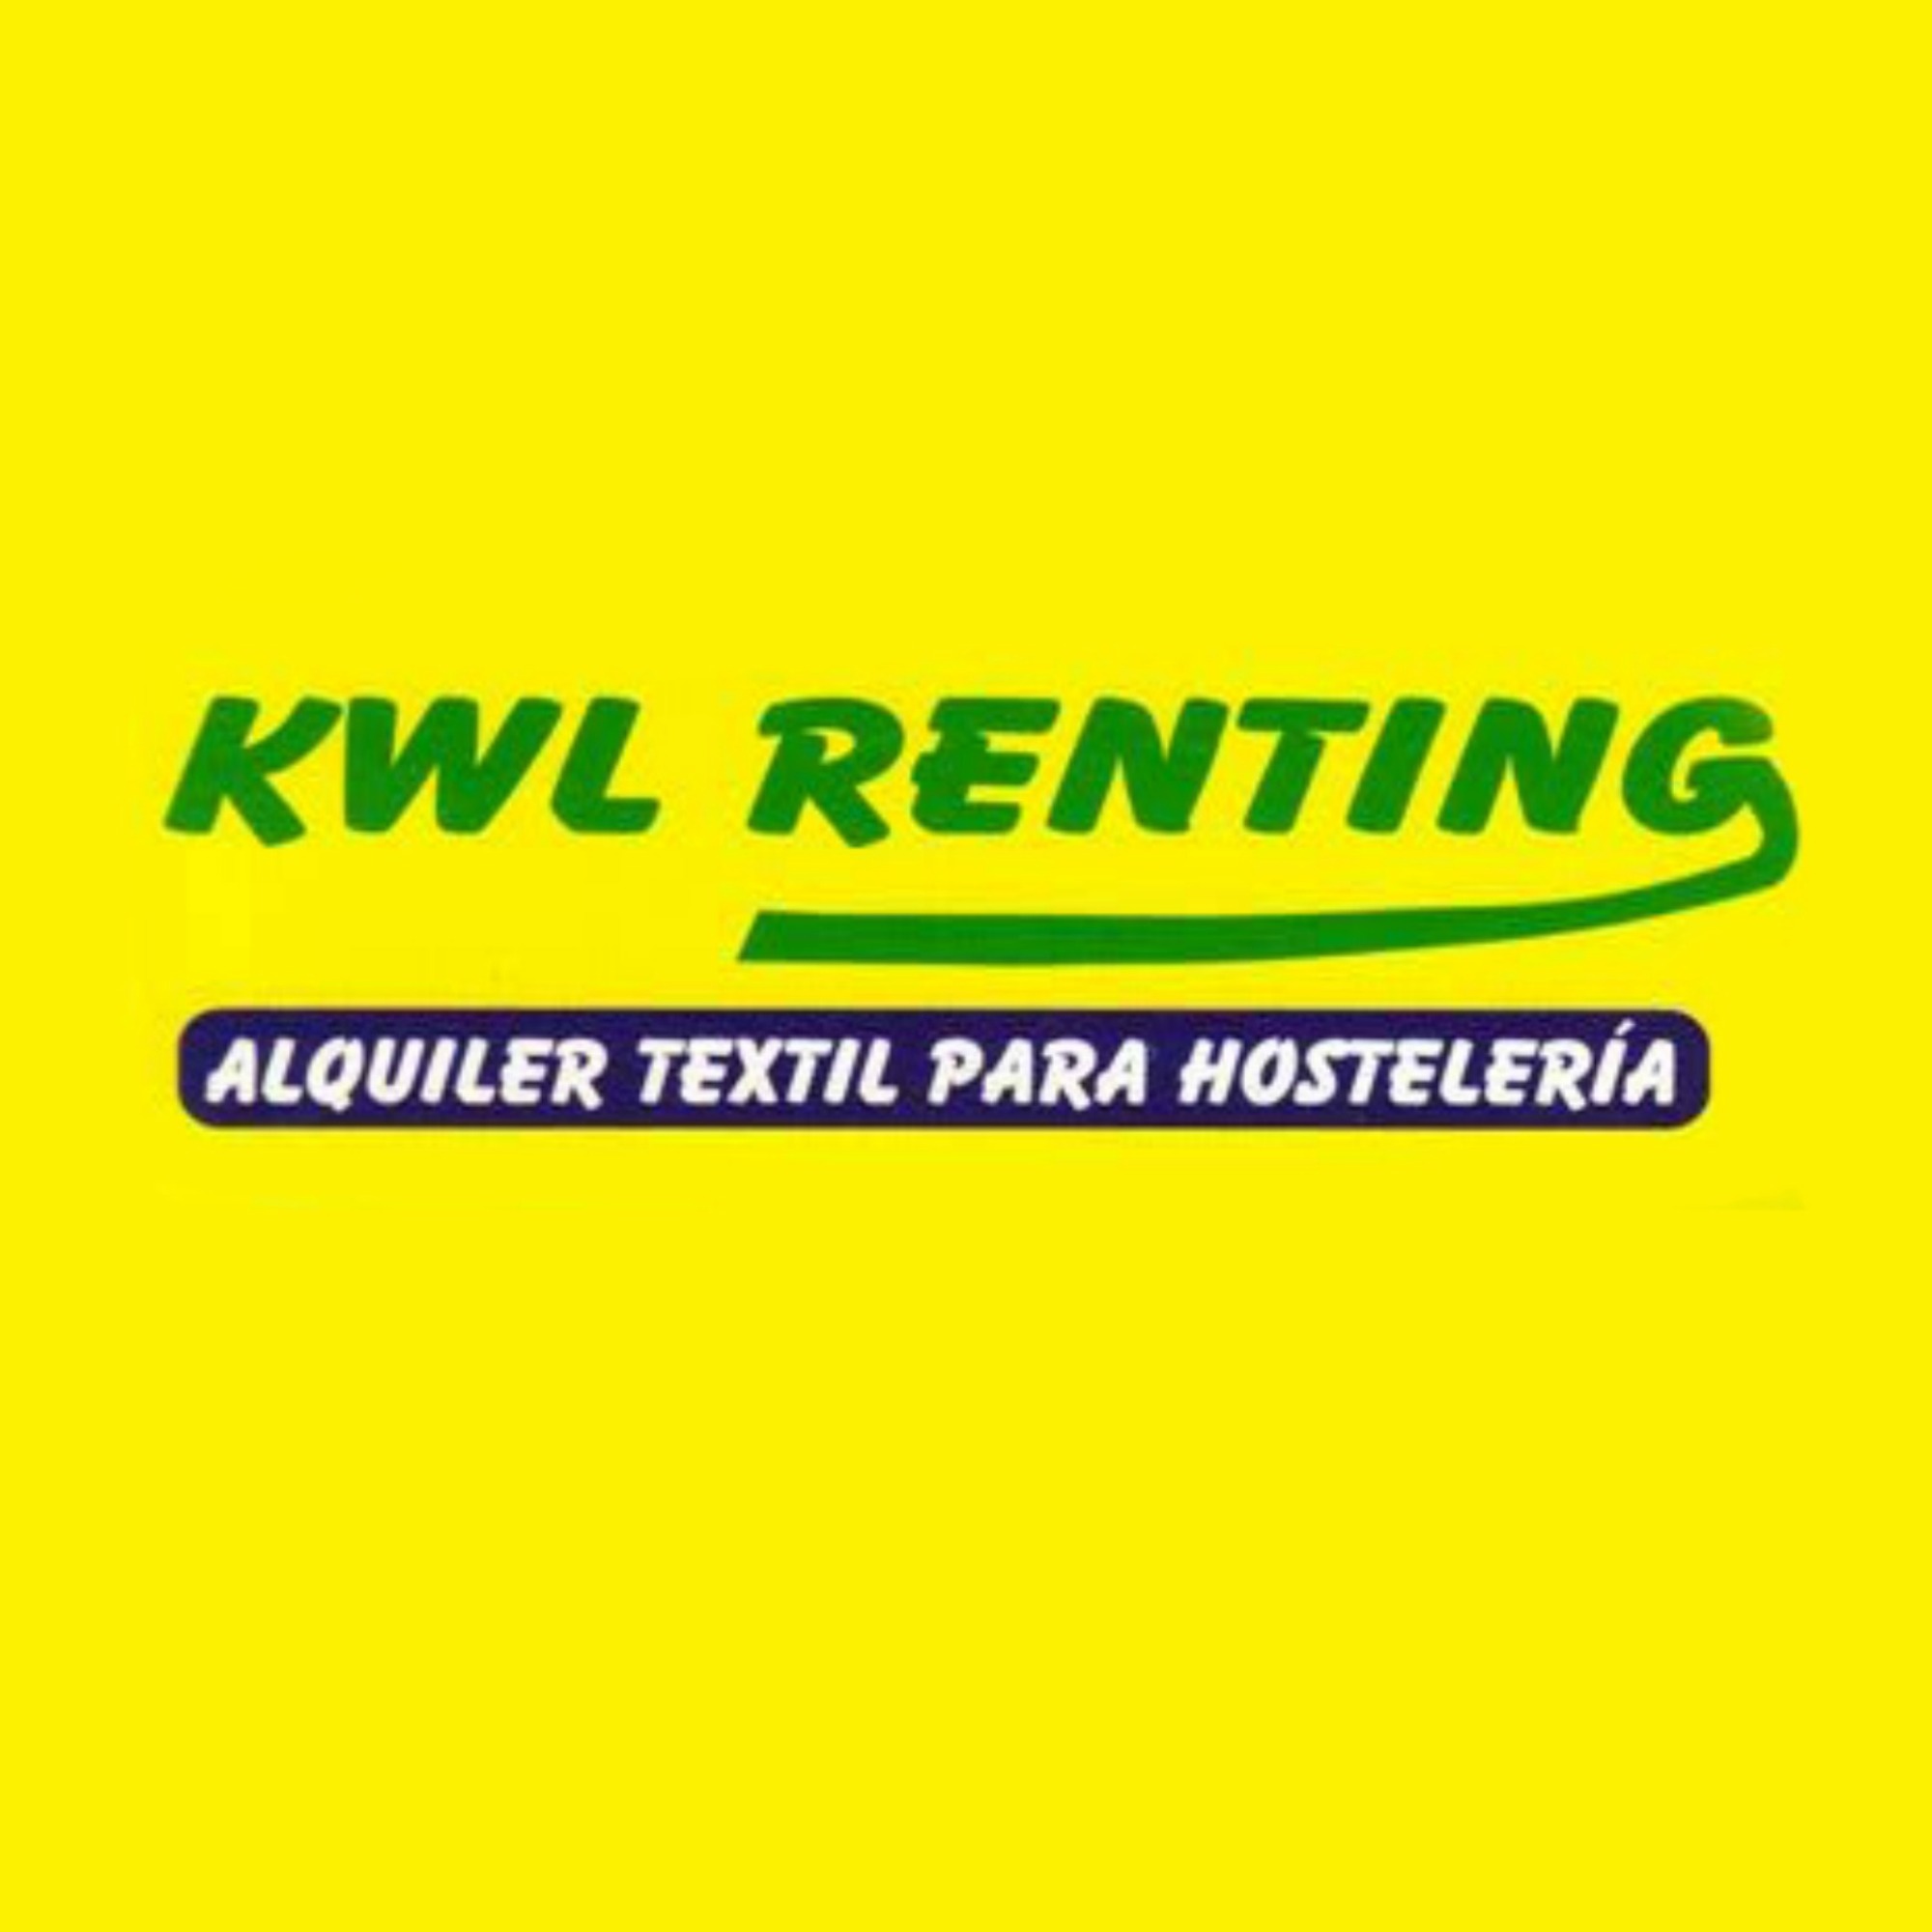 Renting kwl la Safor